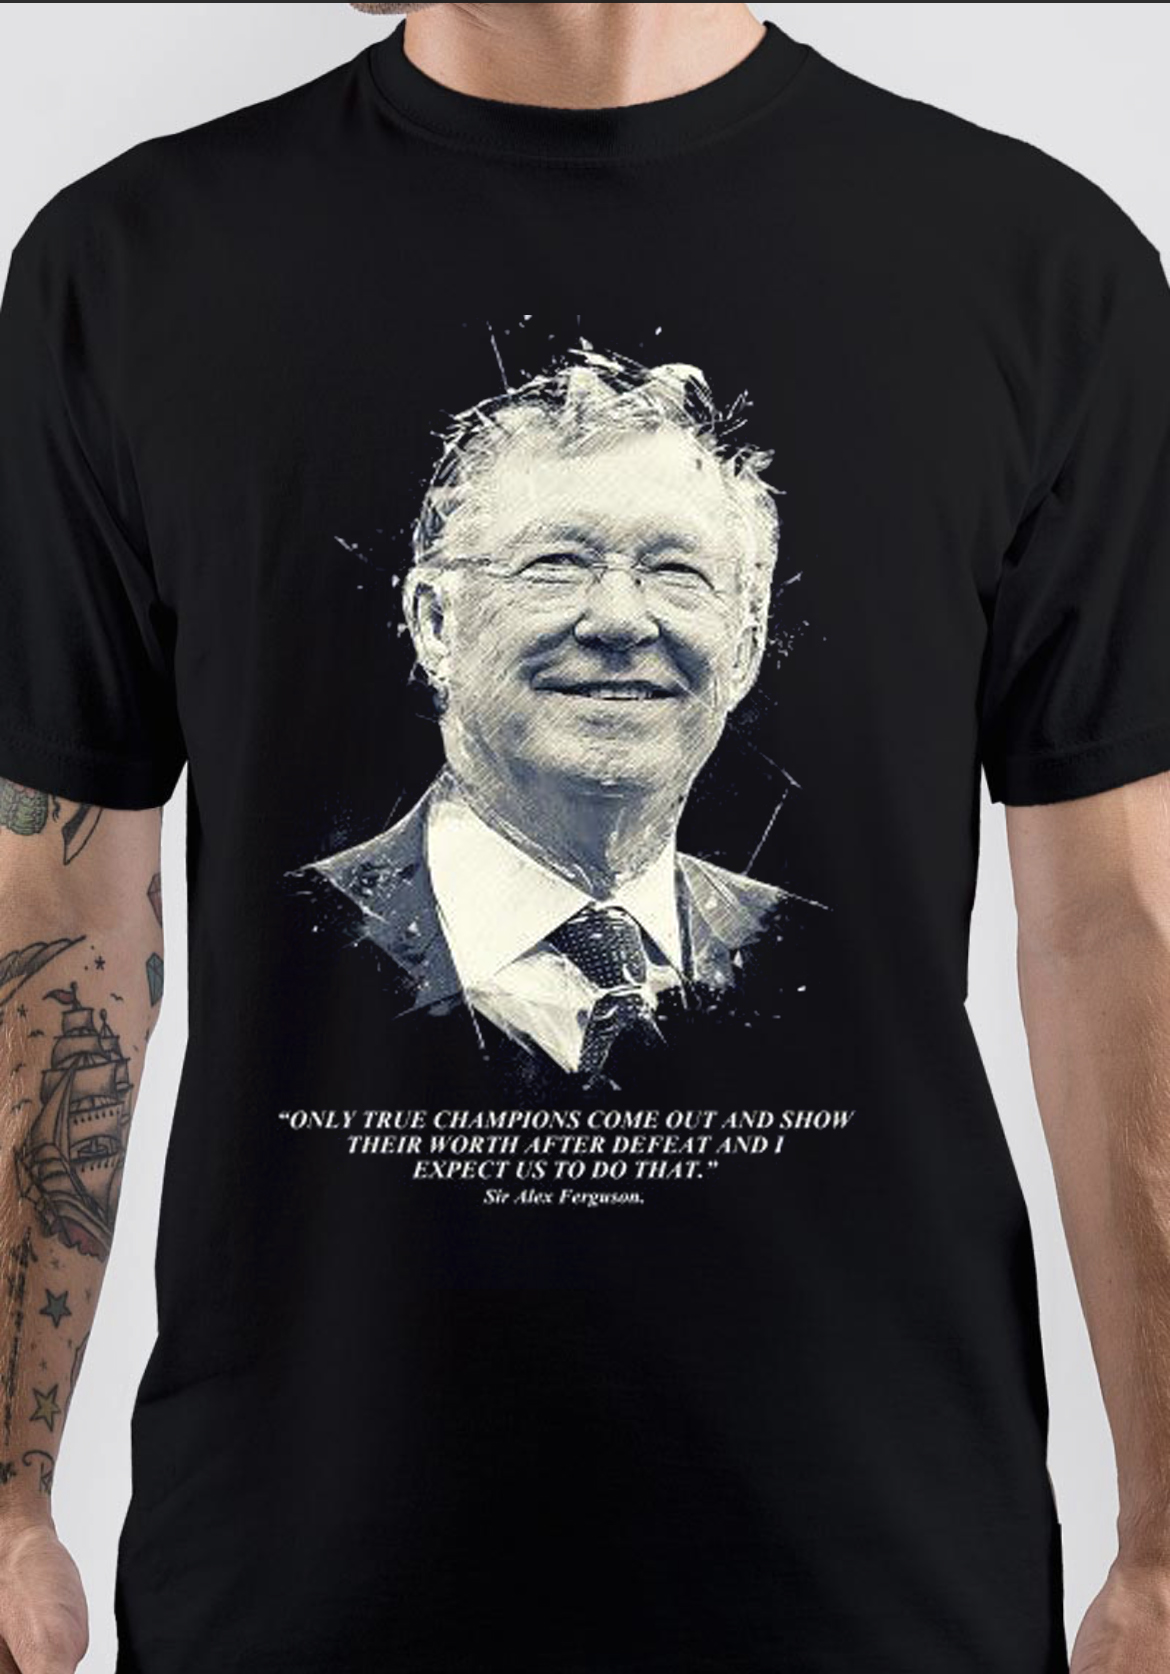 Alex Ferguson T-Shirt And Merchandise